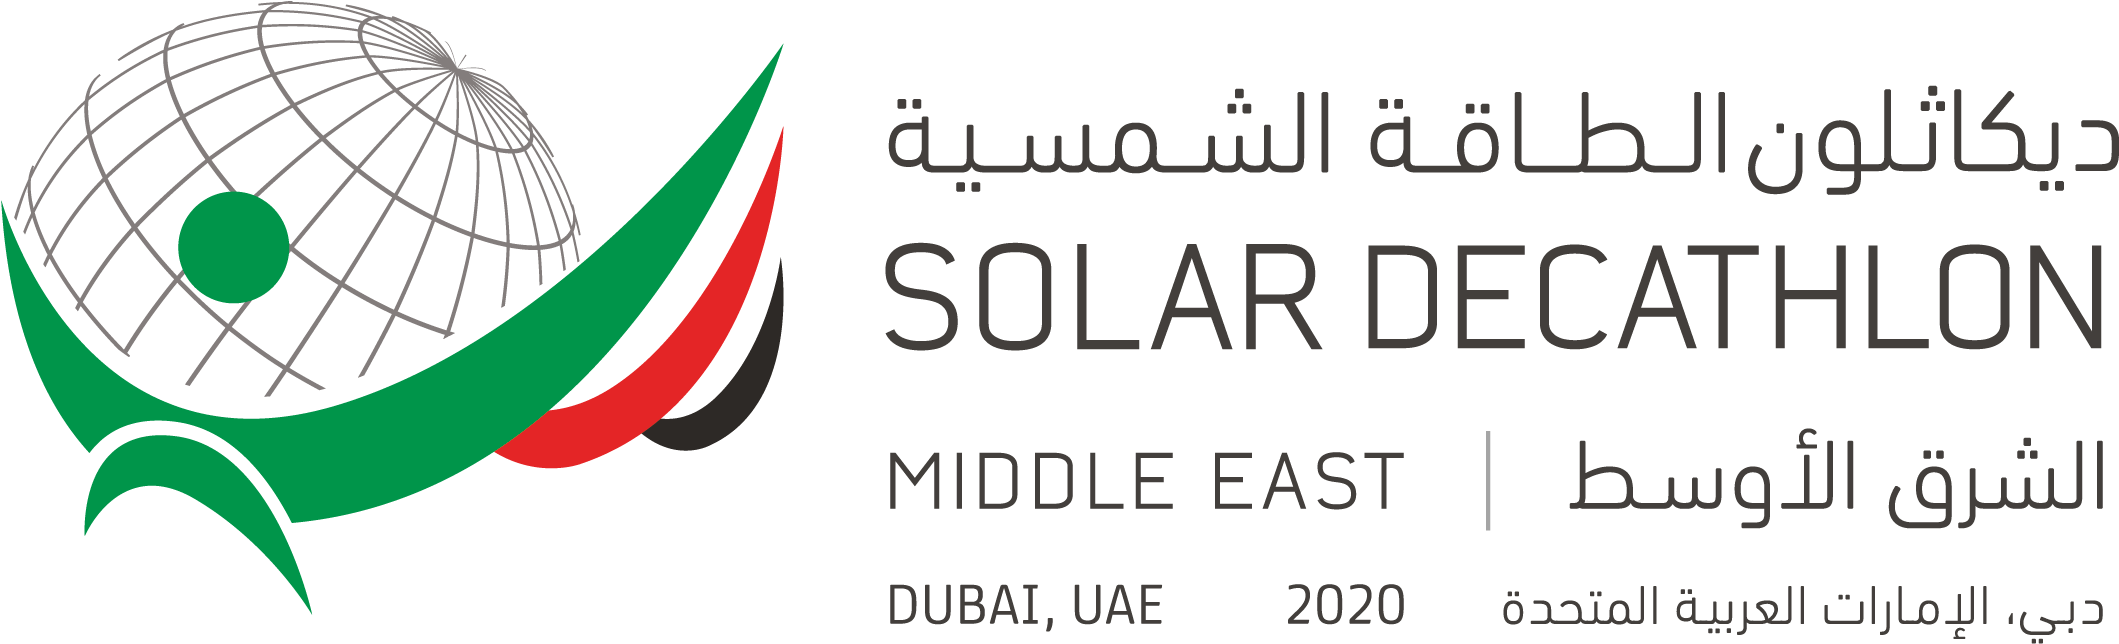 Solar Decathlon Middle East2020 Logo